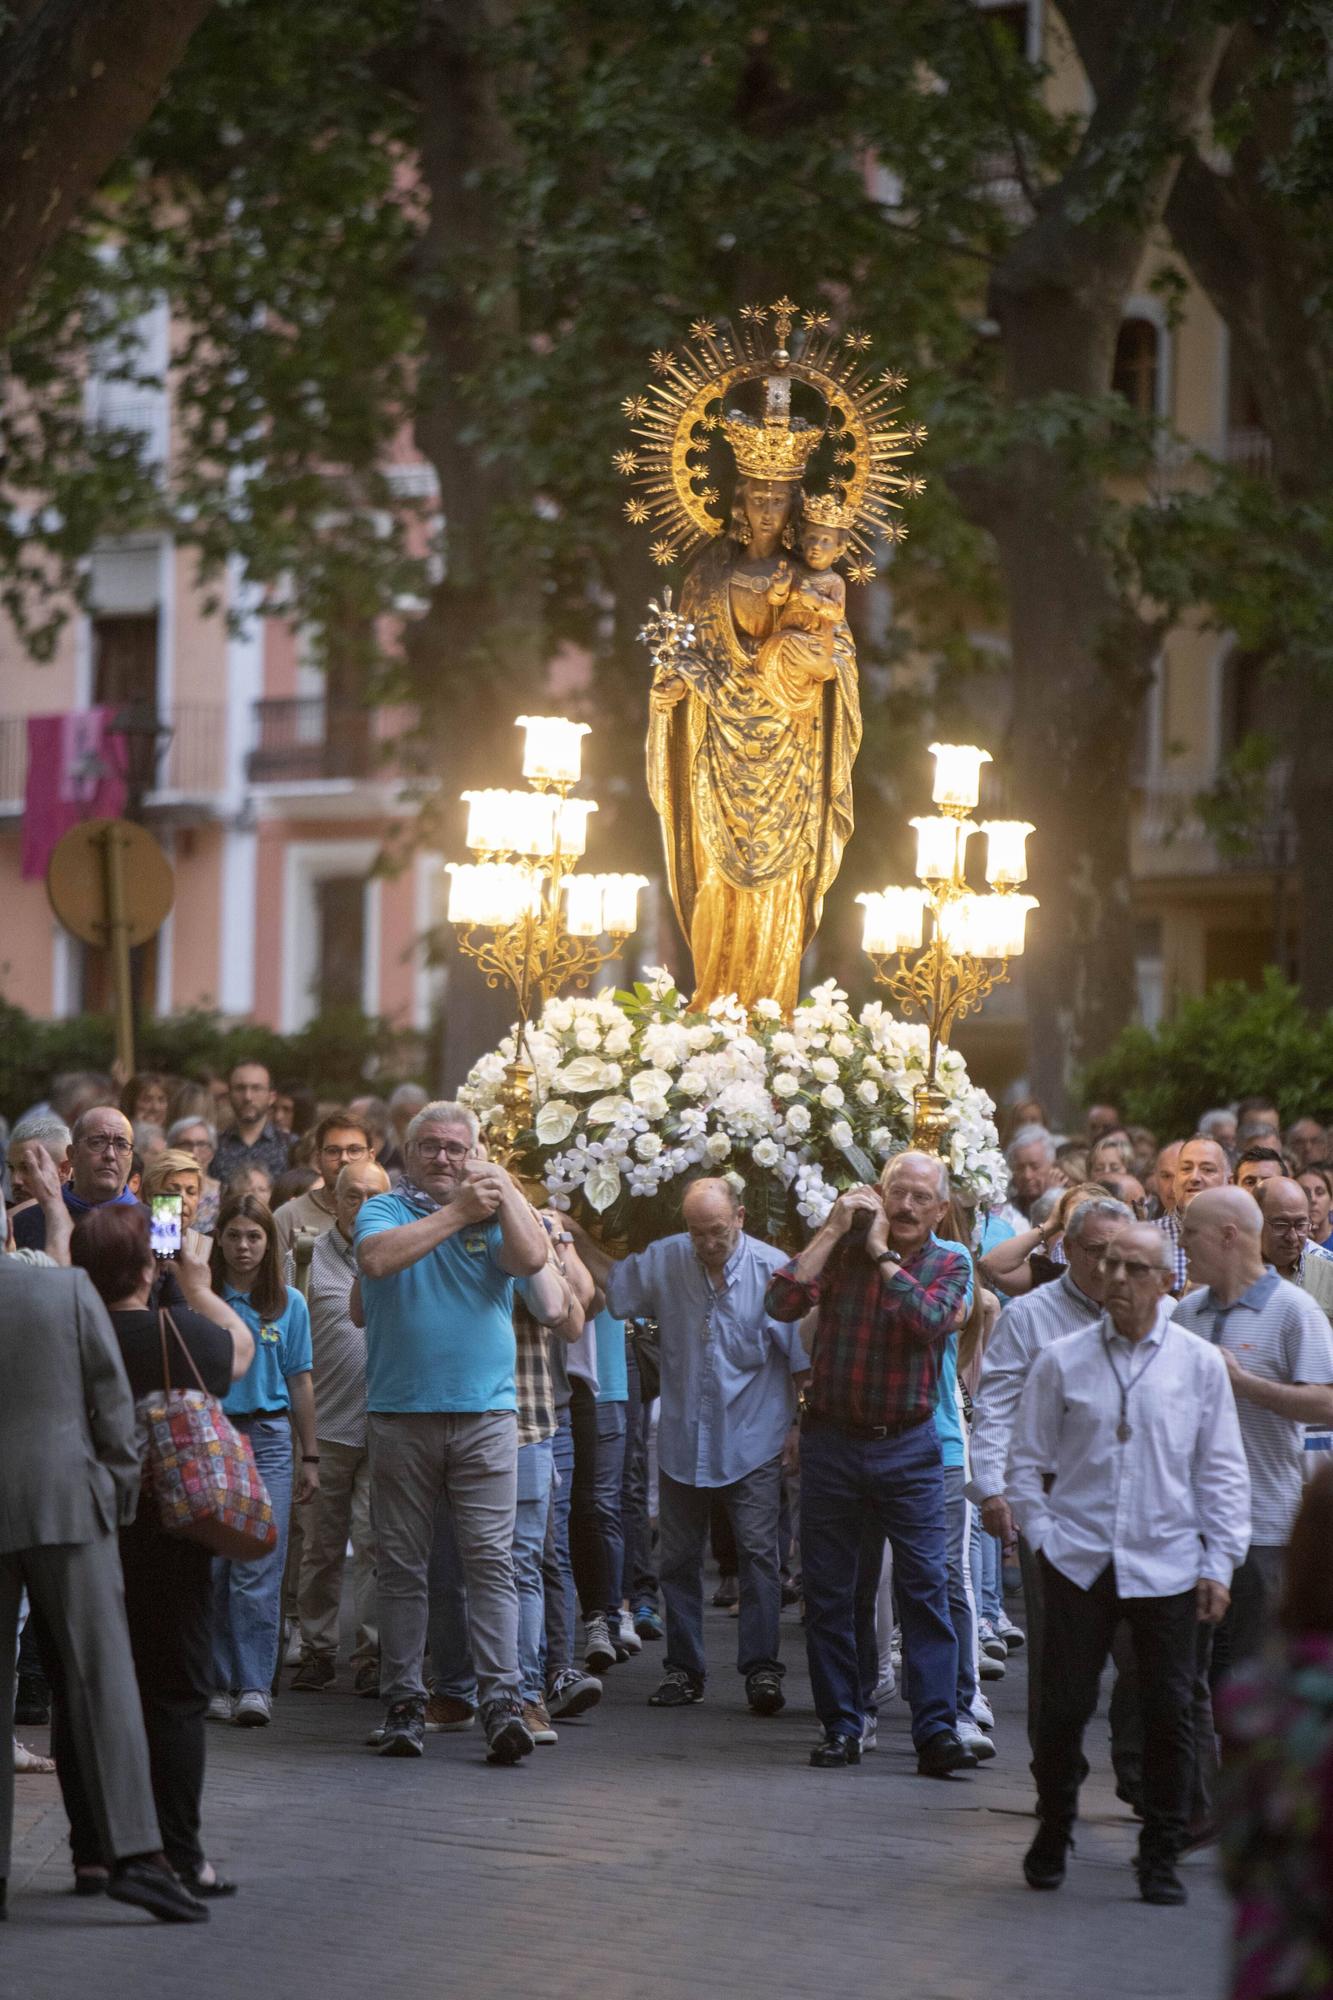 La imagen histórica de la Virgen de la Seu recorre Xàtiva